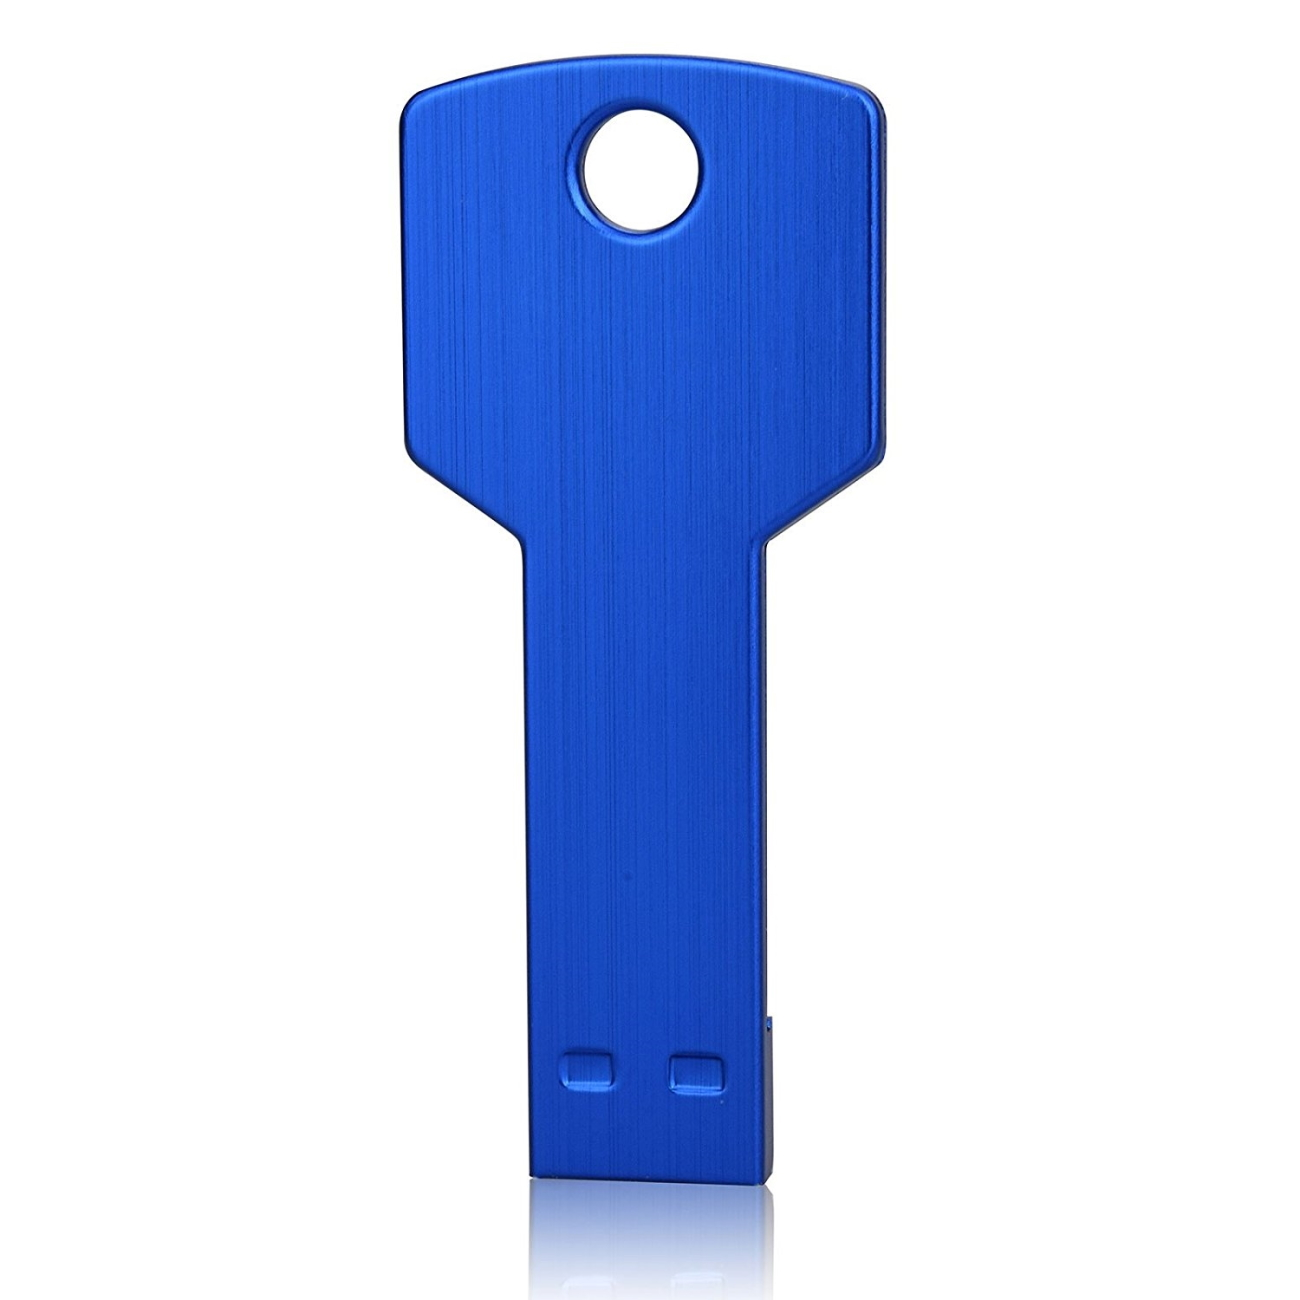 Key USB 32 USB-Stick 32GB Blau GB) (Blau, GERMANY